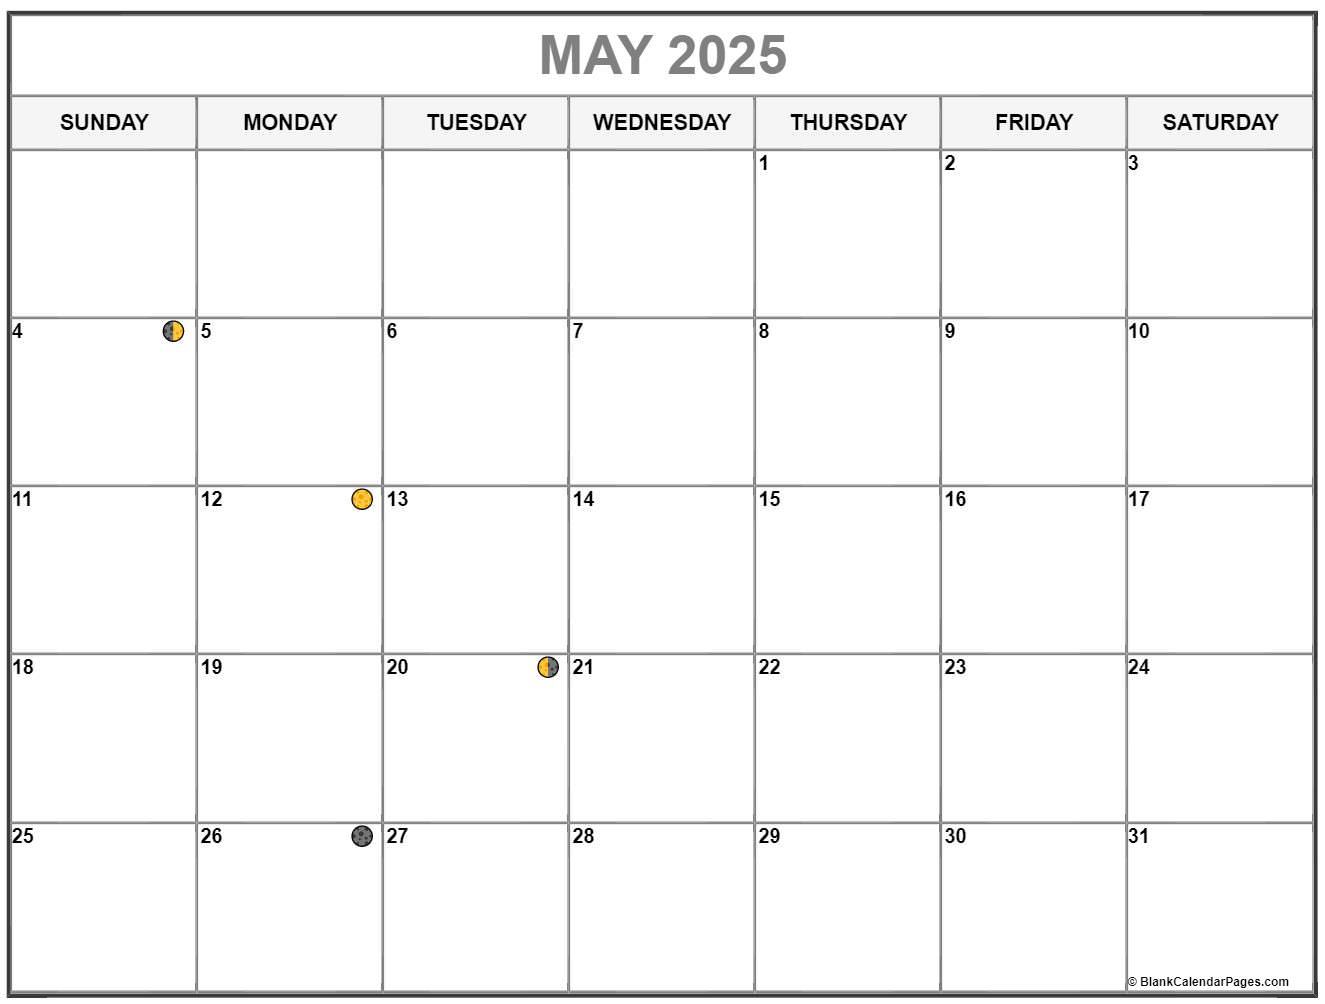 May 2025 Lunar Calendar  Moon Phase Calendar